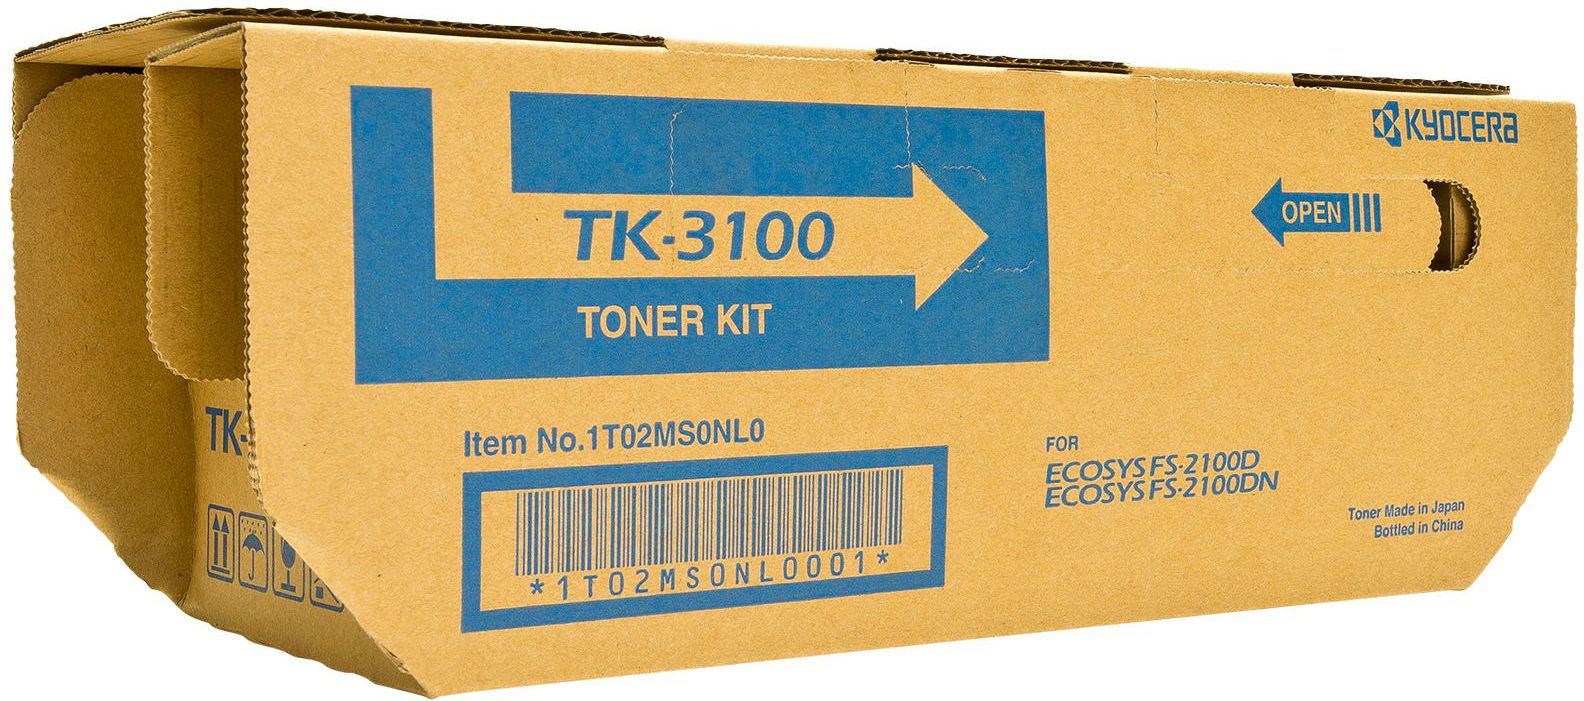 Toner Kyocera TK-3100, Negru